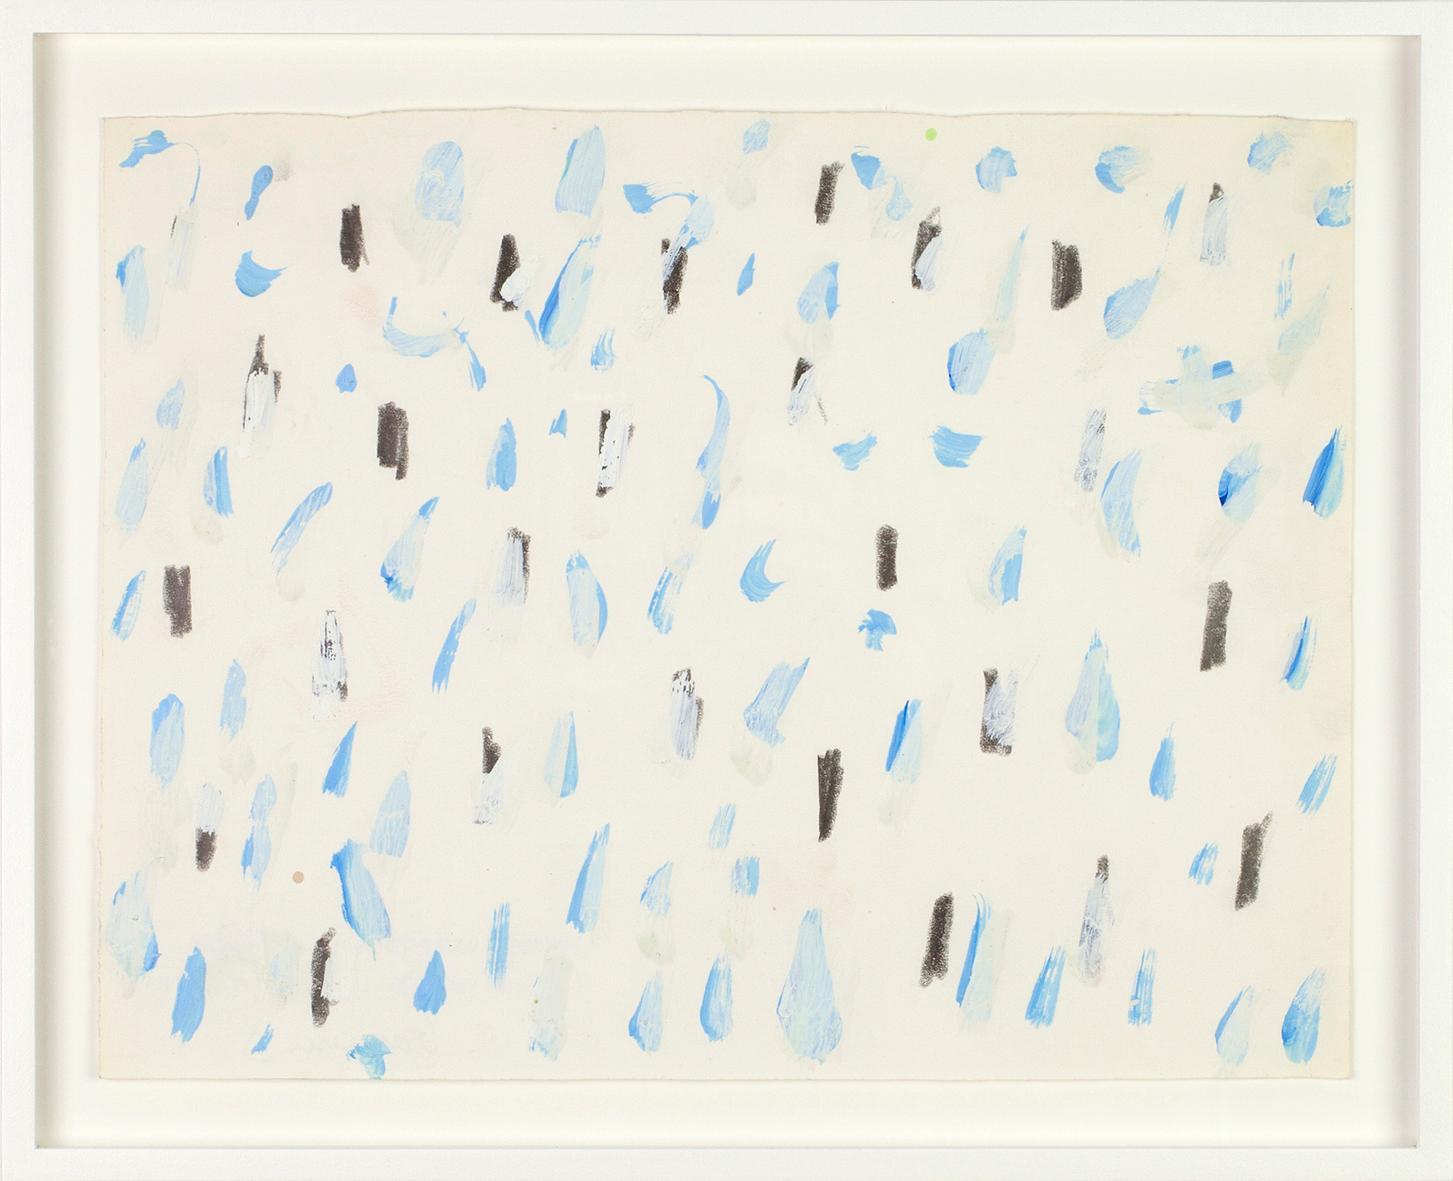 Johan Lennarts
Untitled, 1980
mixed media on paper
25 x 31 cm